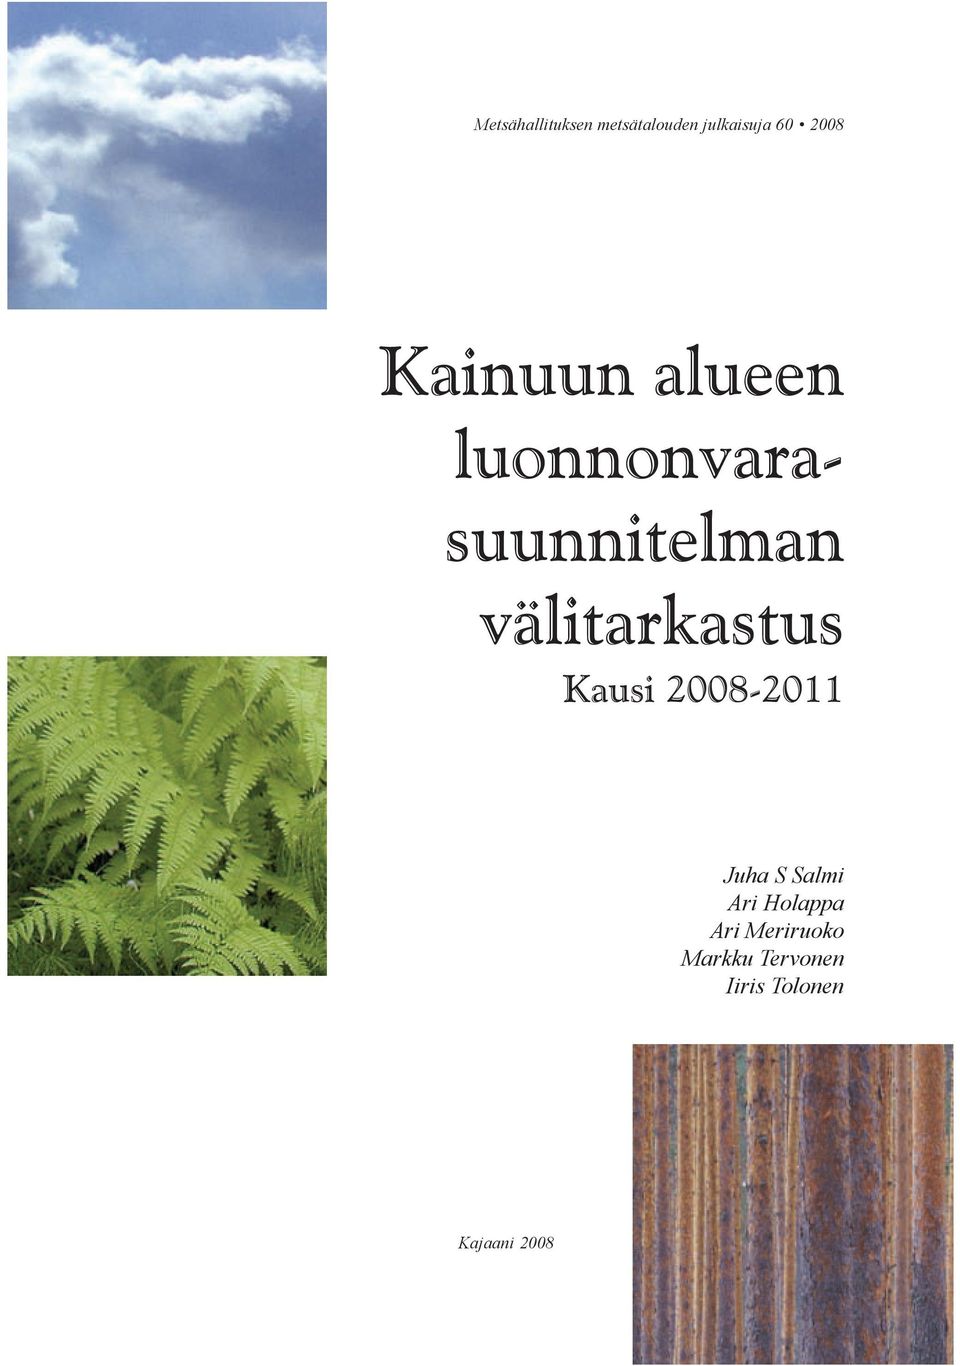 välitarkastus Kausi 2008-2011 Juha S Salmi Ari